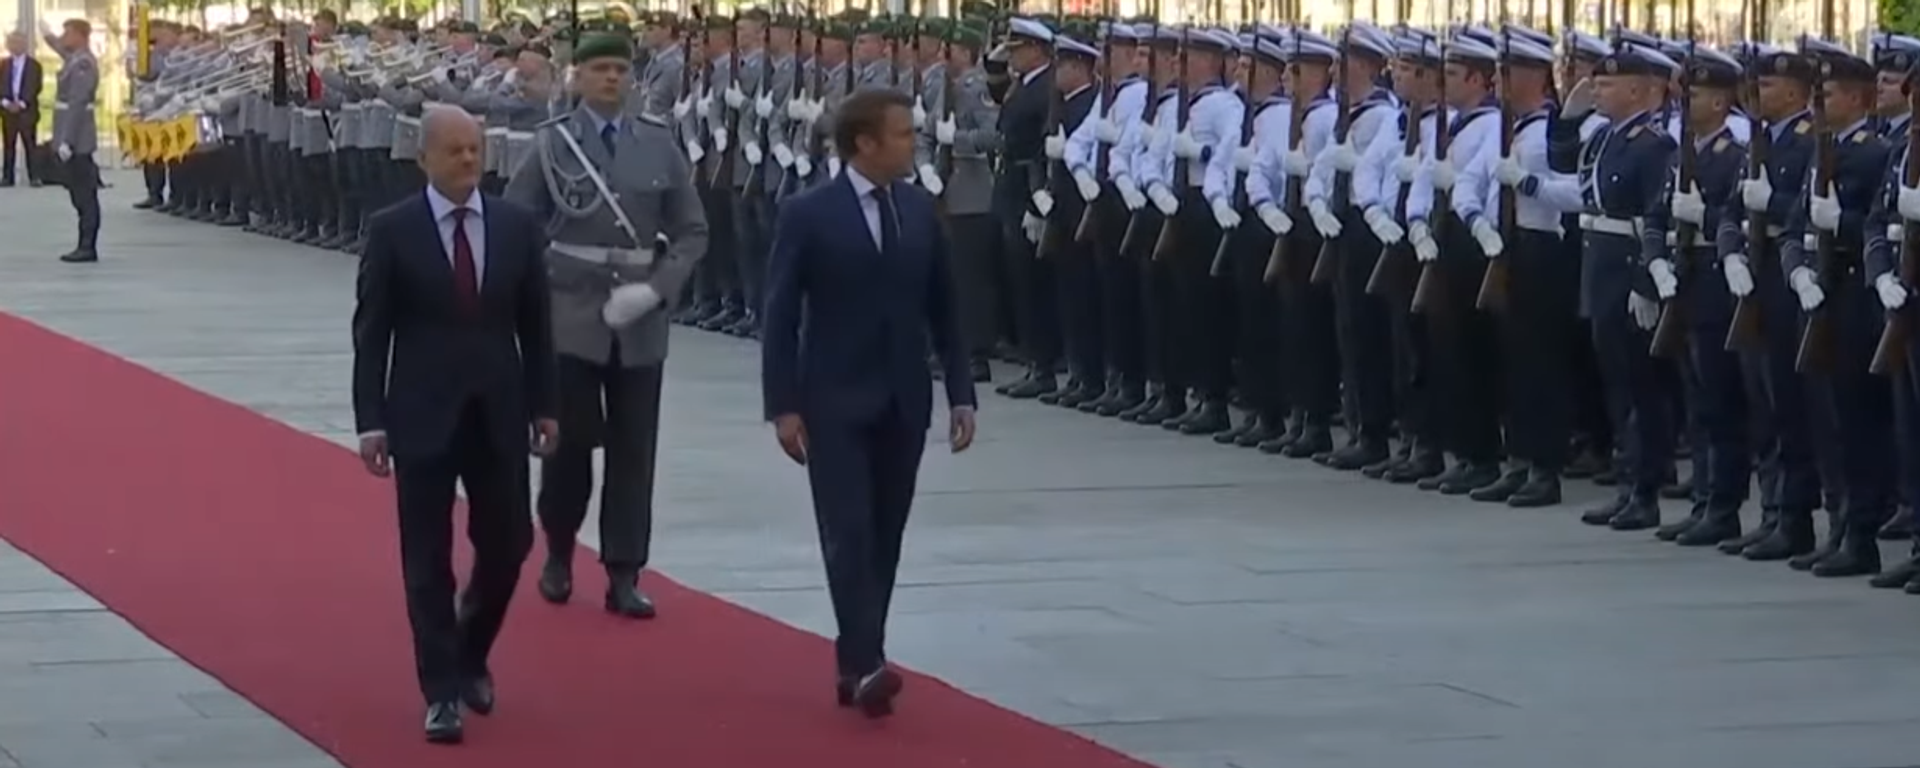 French President Emmanuel Macron and German Chancellor Olaf Scholz observe honour guard in Berlin during Macron's visit. 9 May 2022. - Sputnik International, 1920, 09.05.2022